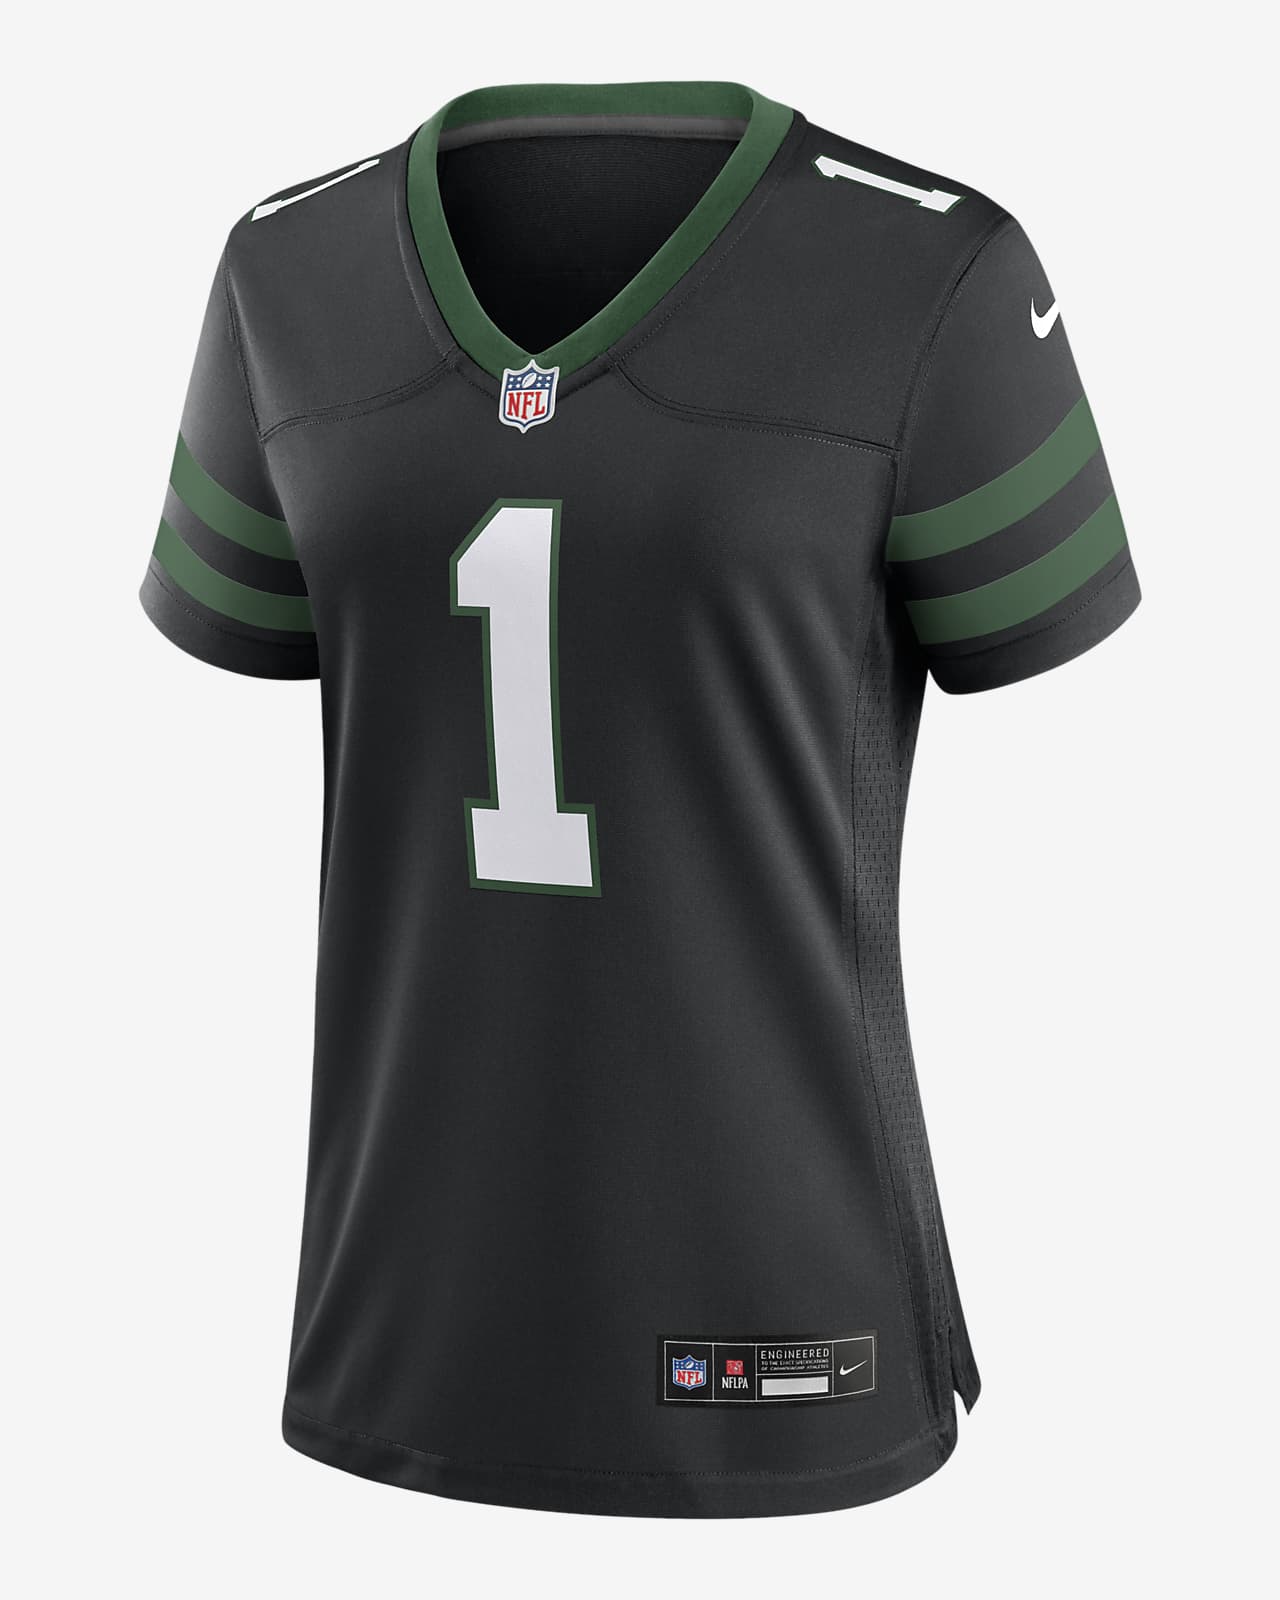 Jersey de fútbol americano Nike de la NFL Game para mujer Sauce Gardner New York Jets